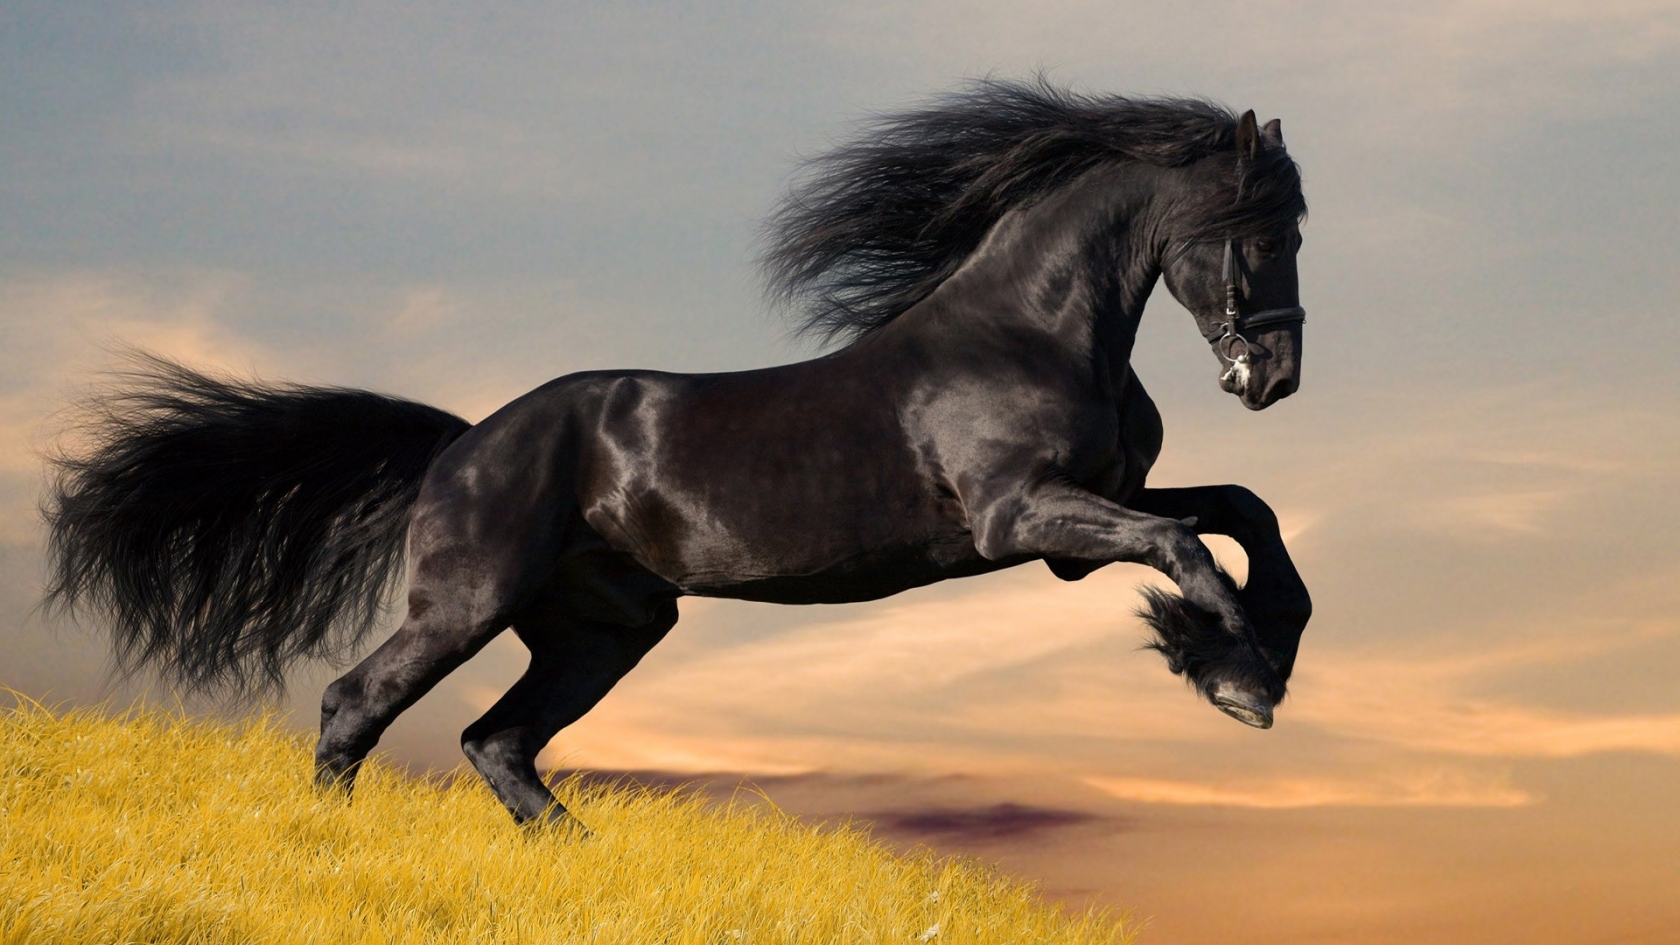 Amazing Black Horse for 1680 x 945 HDTV resolution